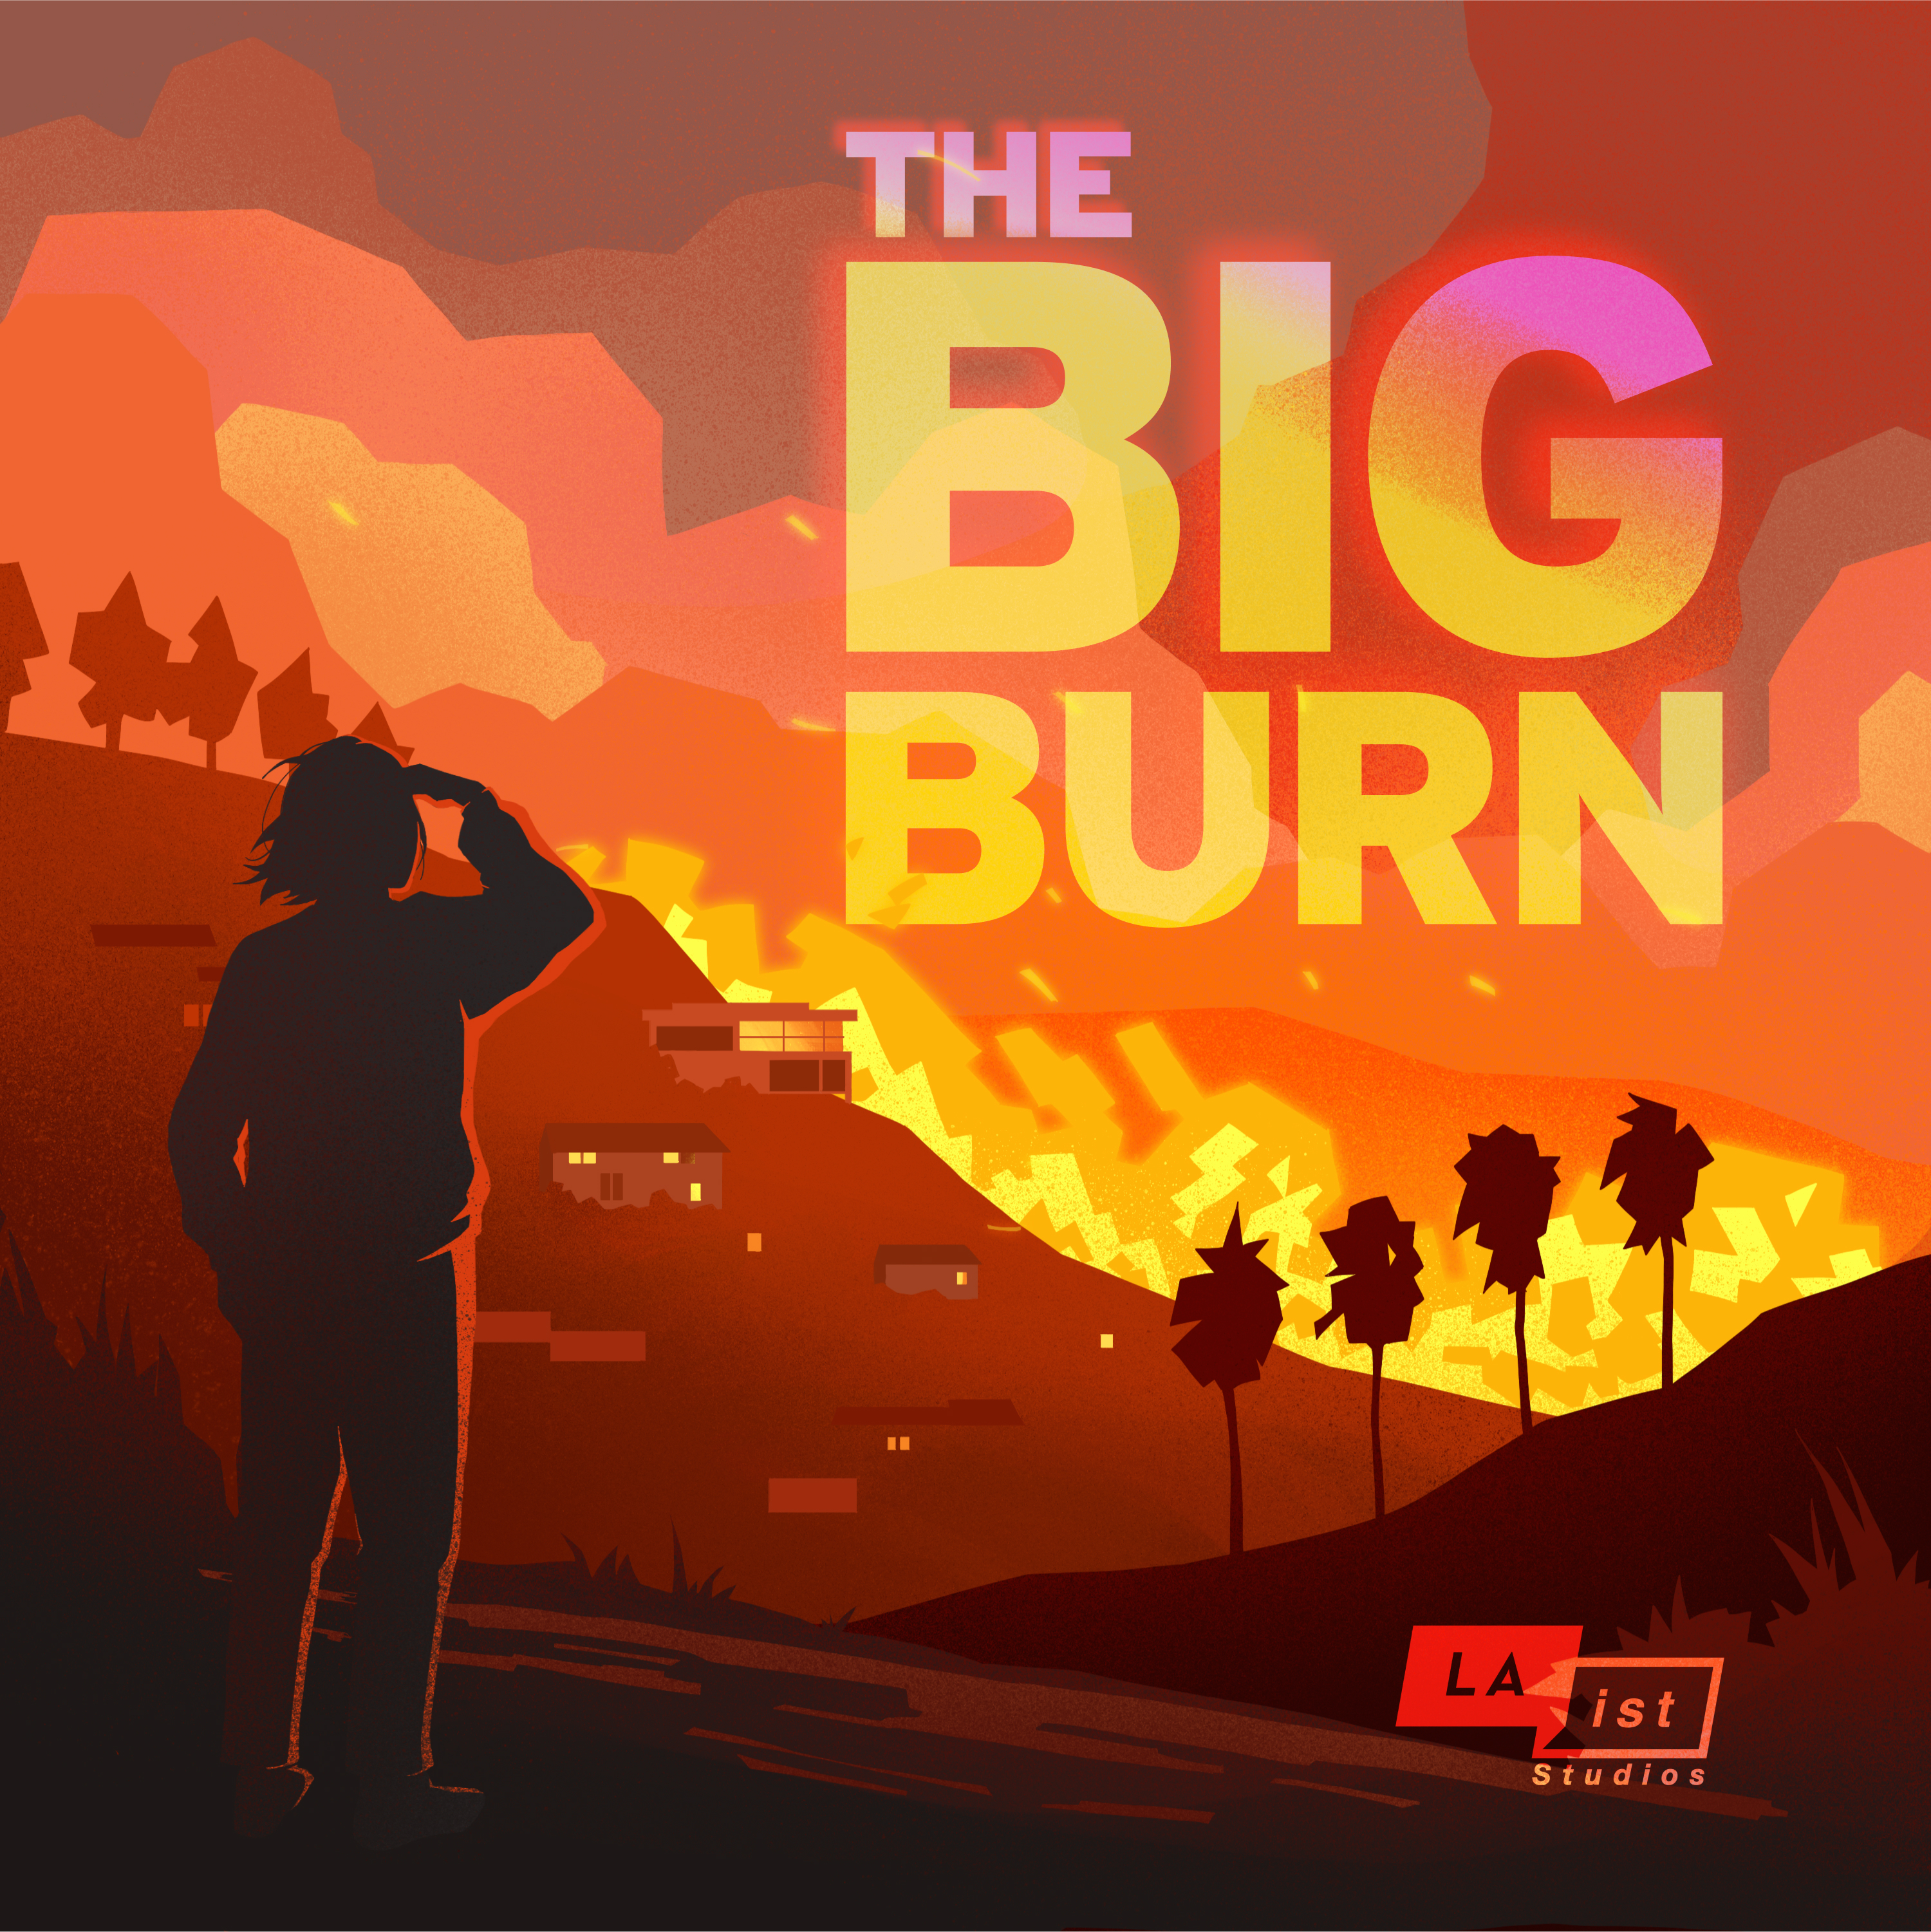 The Big Disaster: The Big Burn